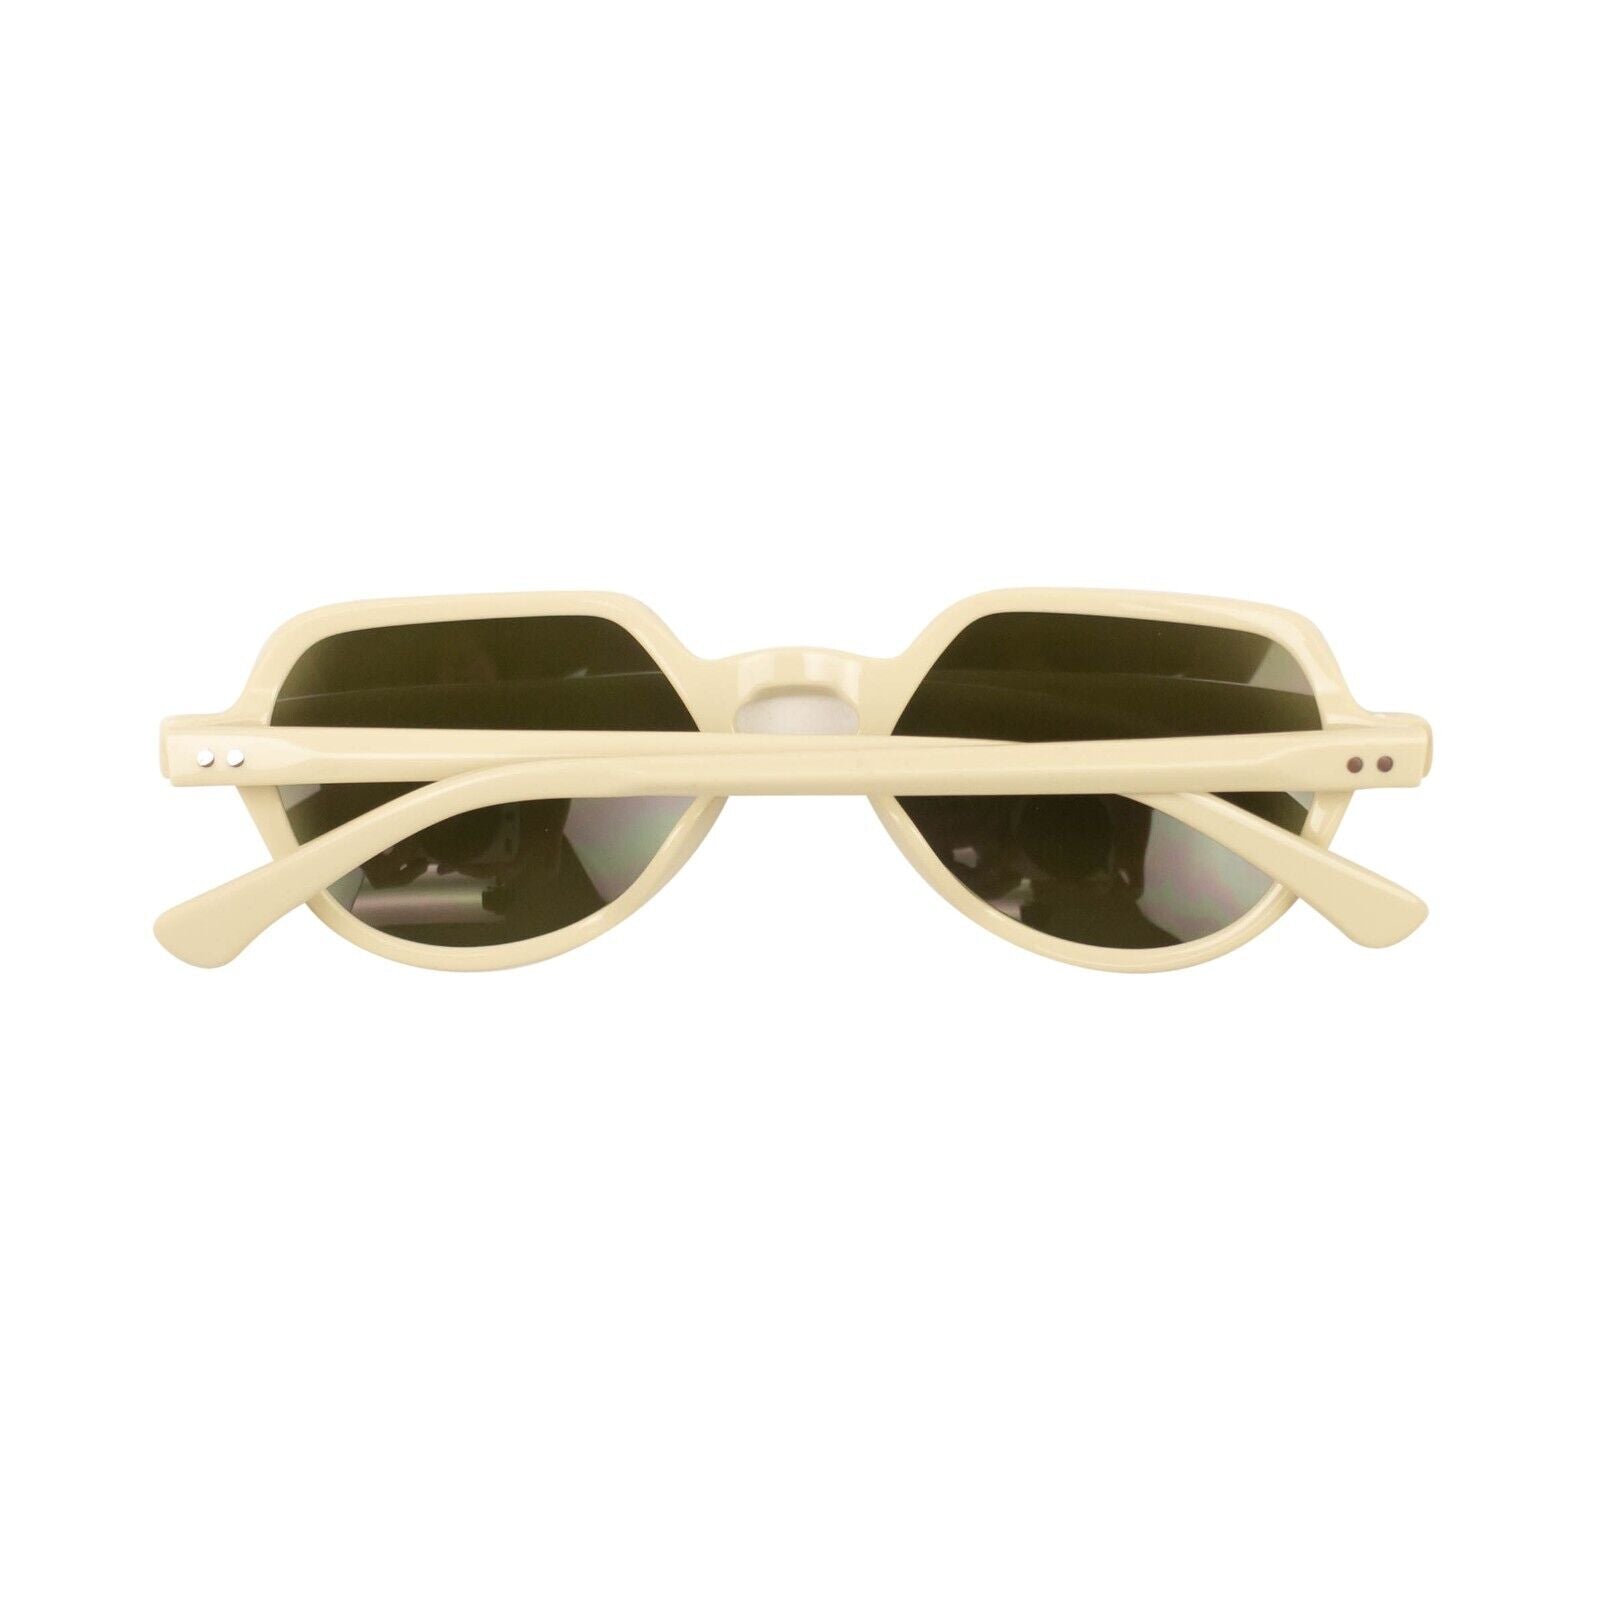 Dries Van Noten X Linda Farrow Vintage Sunglasses - Ivory/Khaki